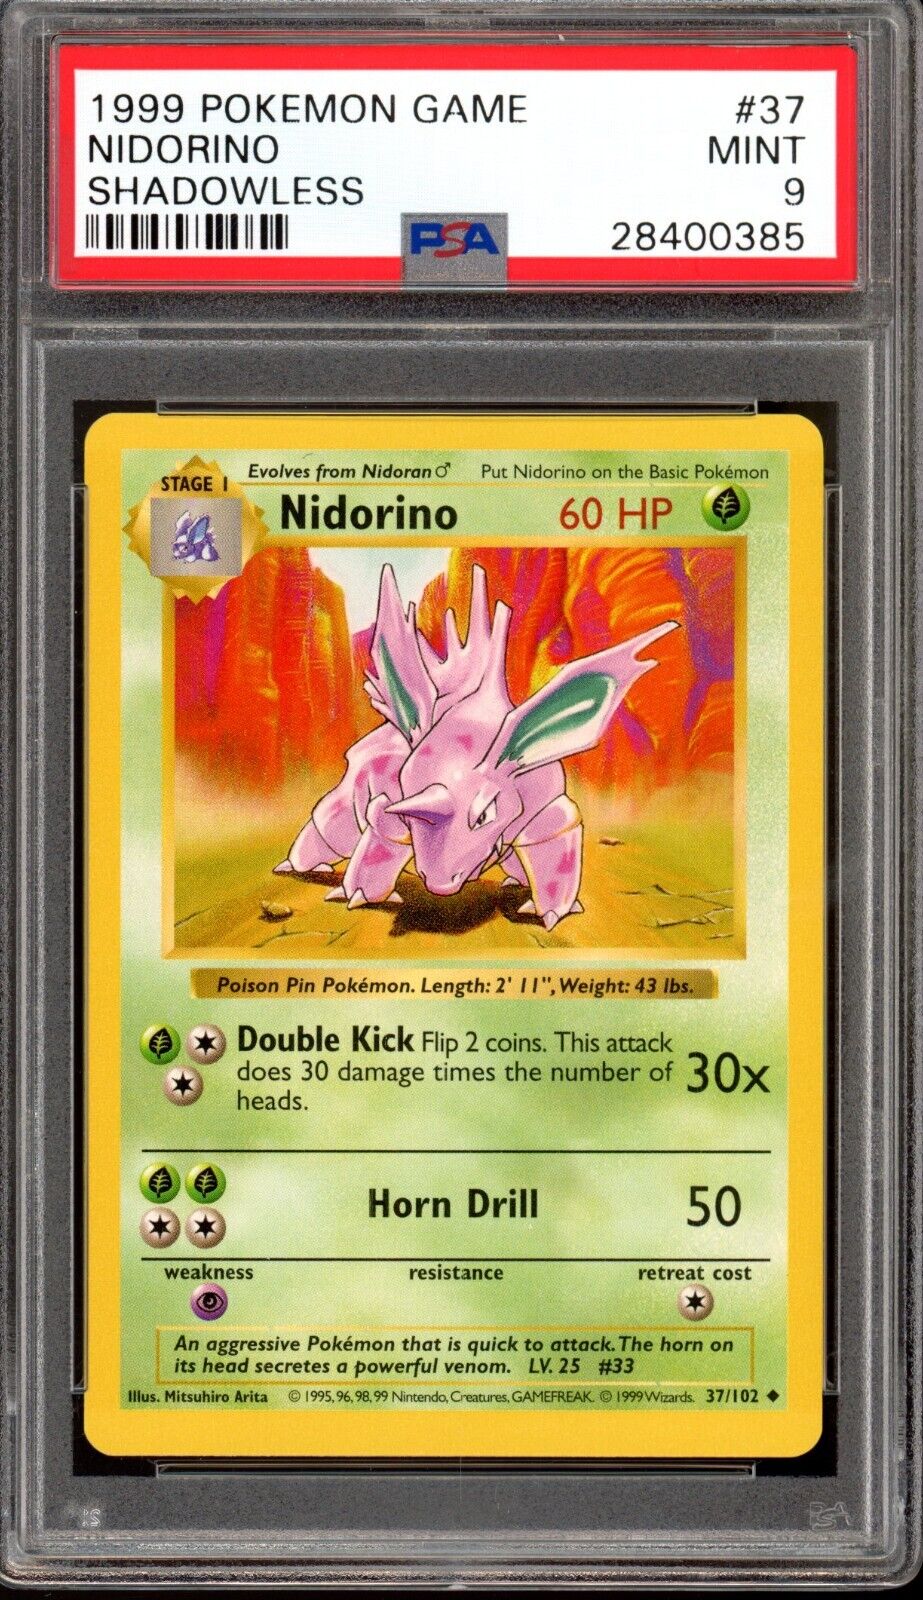 1999 Pokemon Base Set Shadowless Nidorino 37/102 PSA 9 Mint